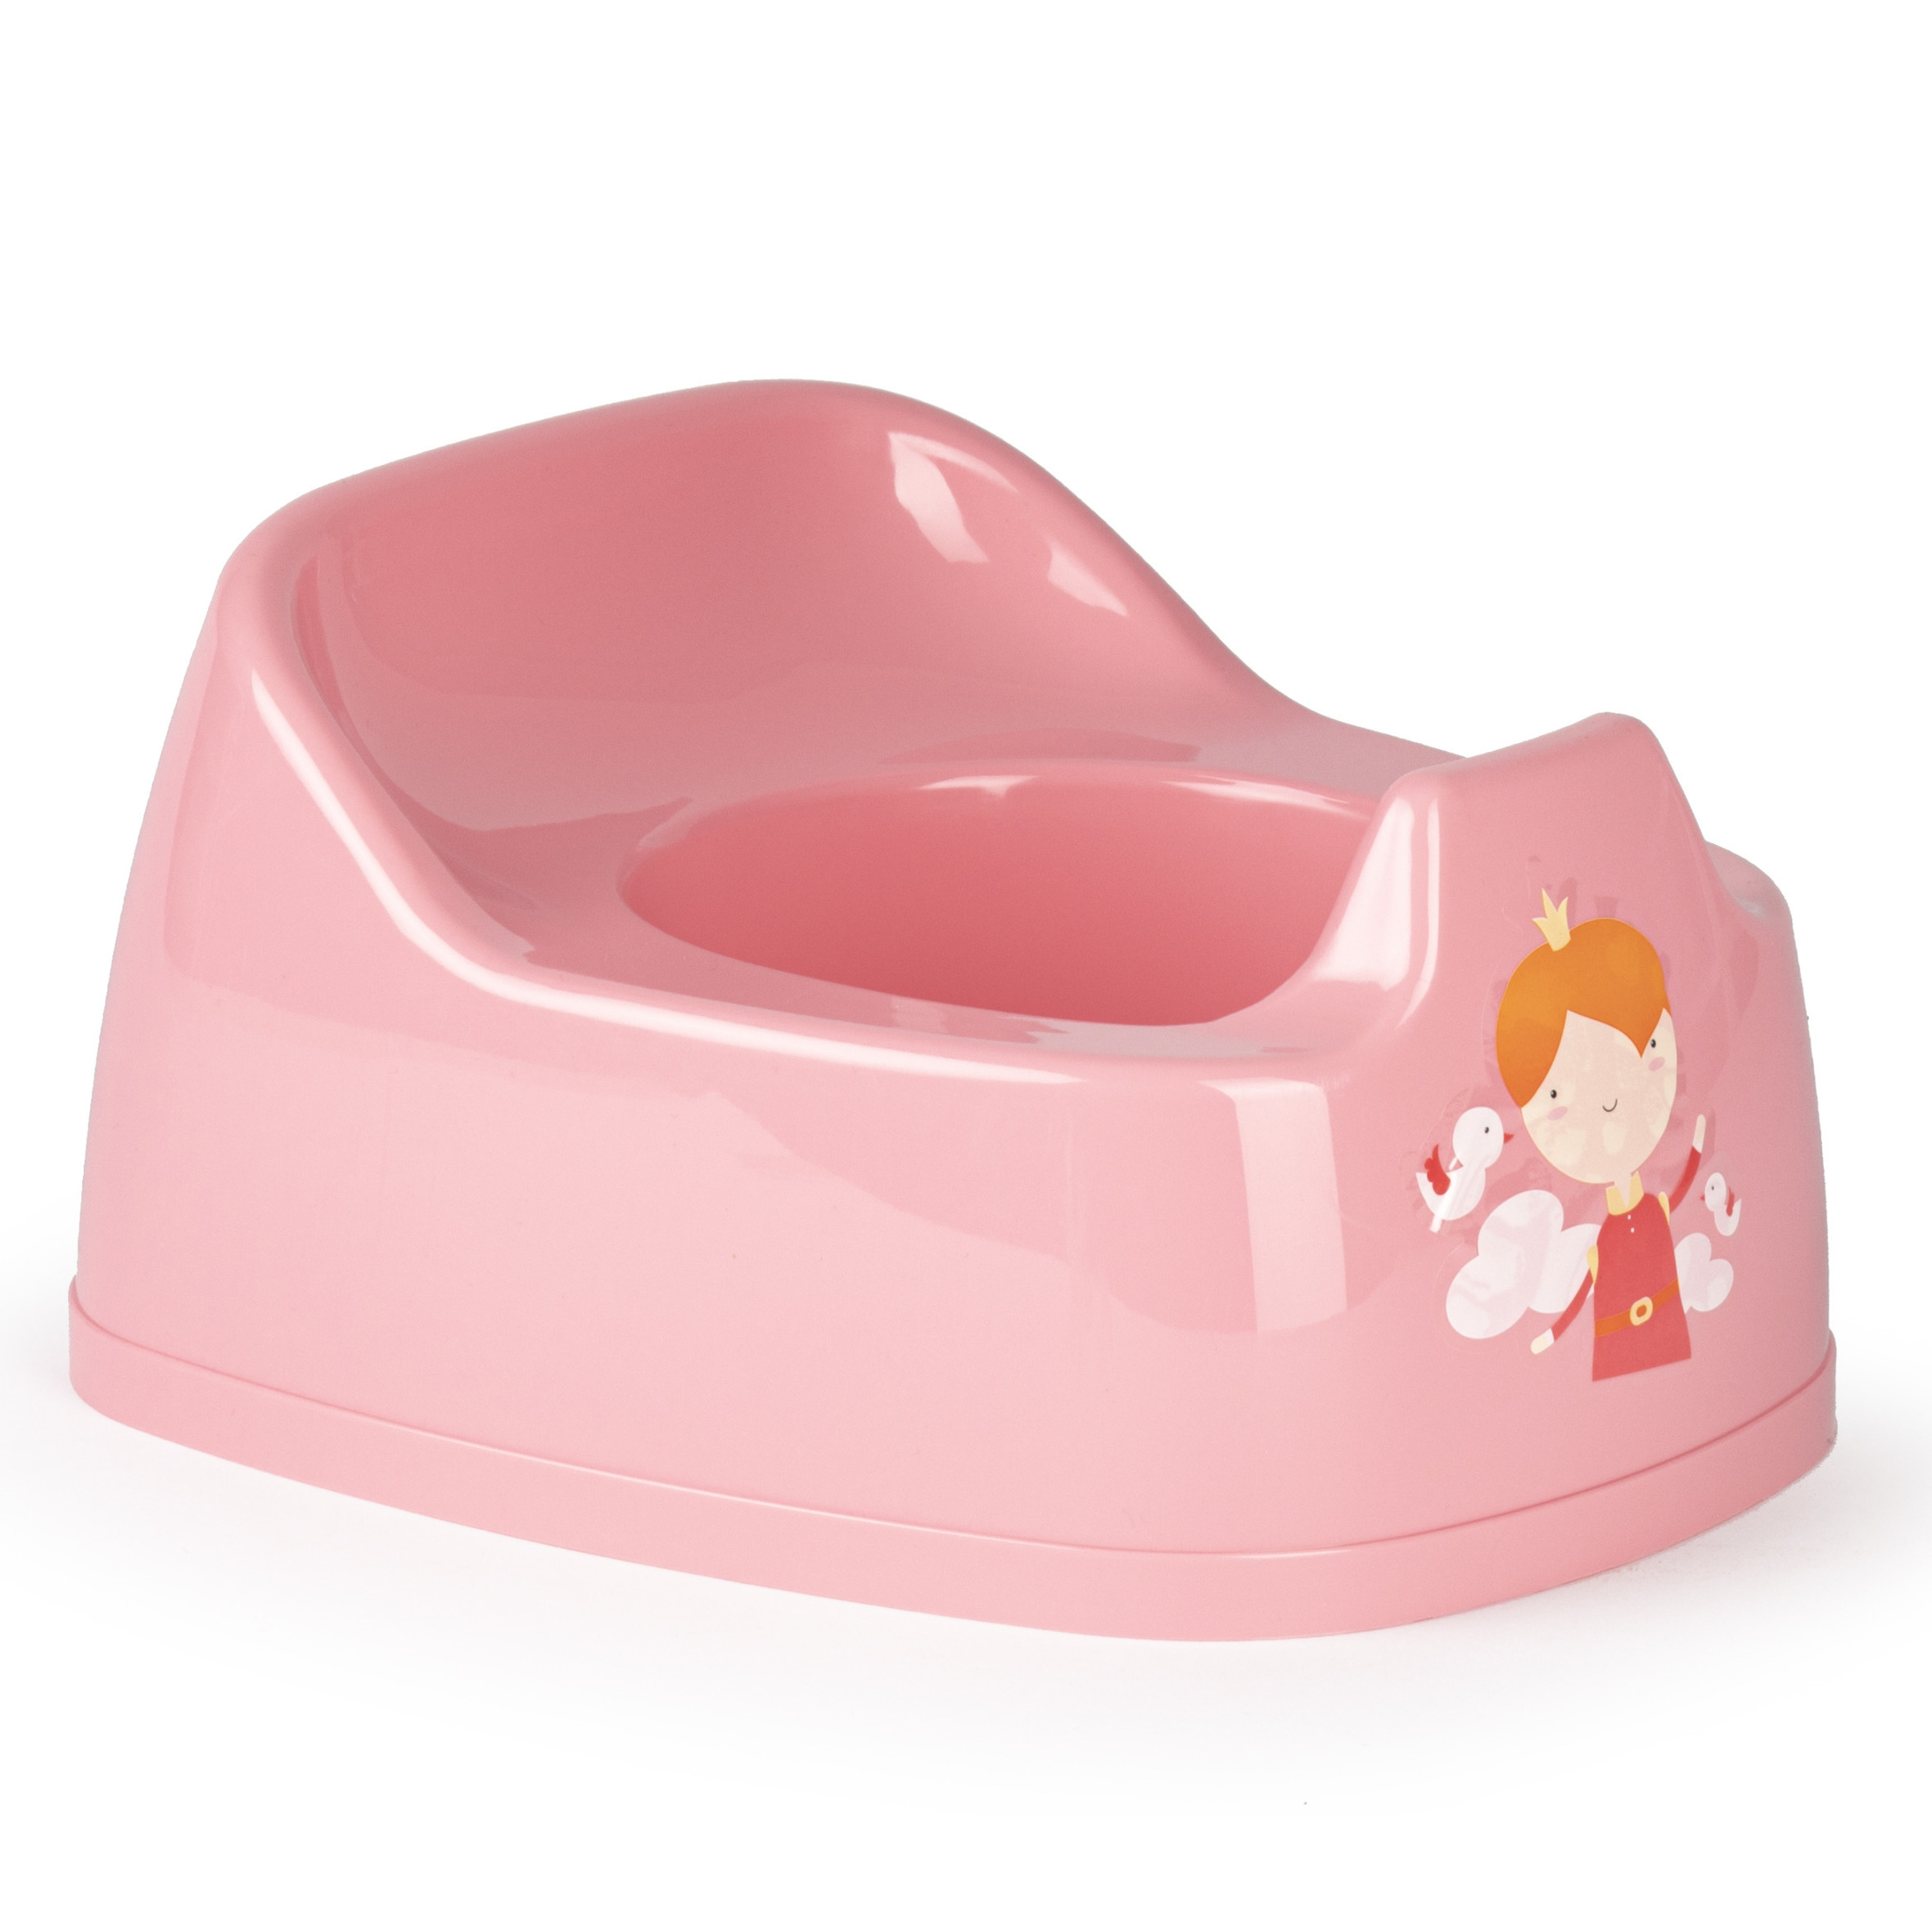 Baby-peuter plaspotje-wc potje roze 27 cm